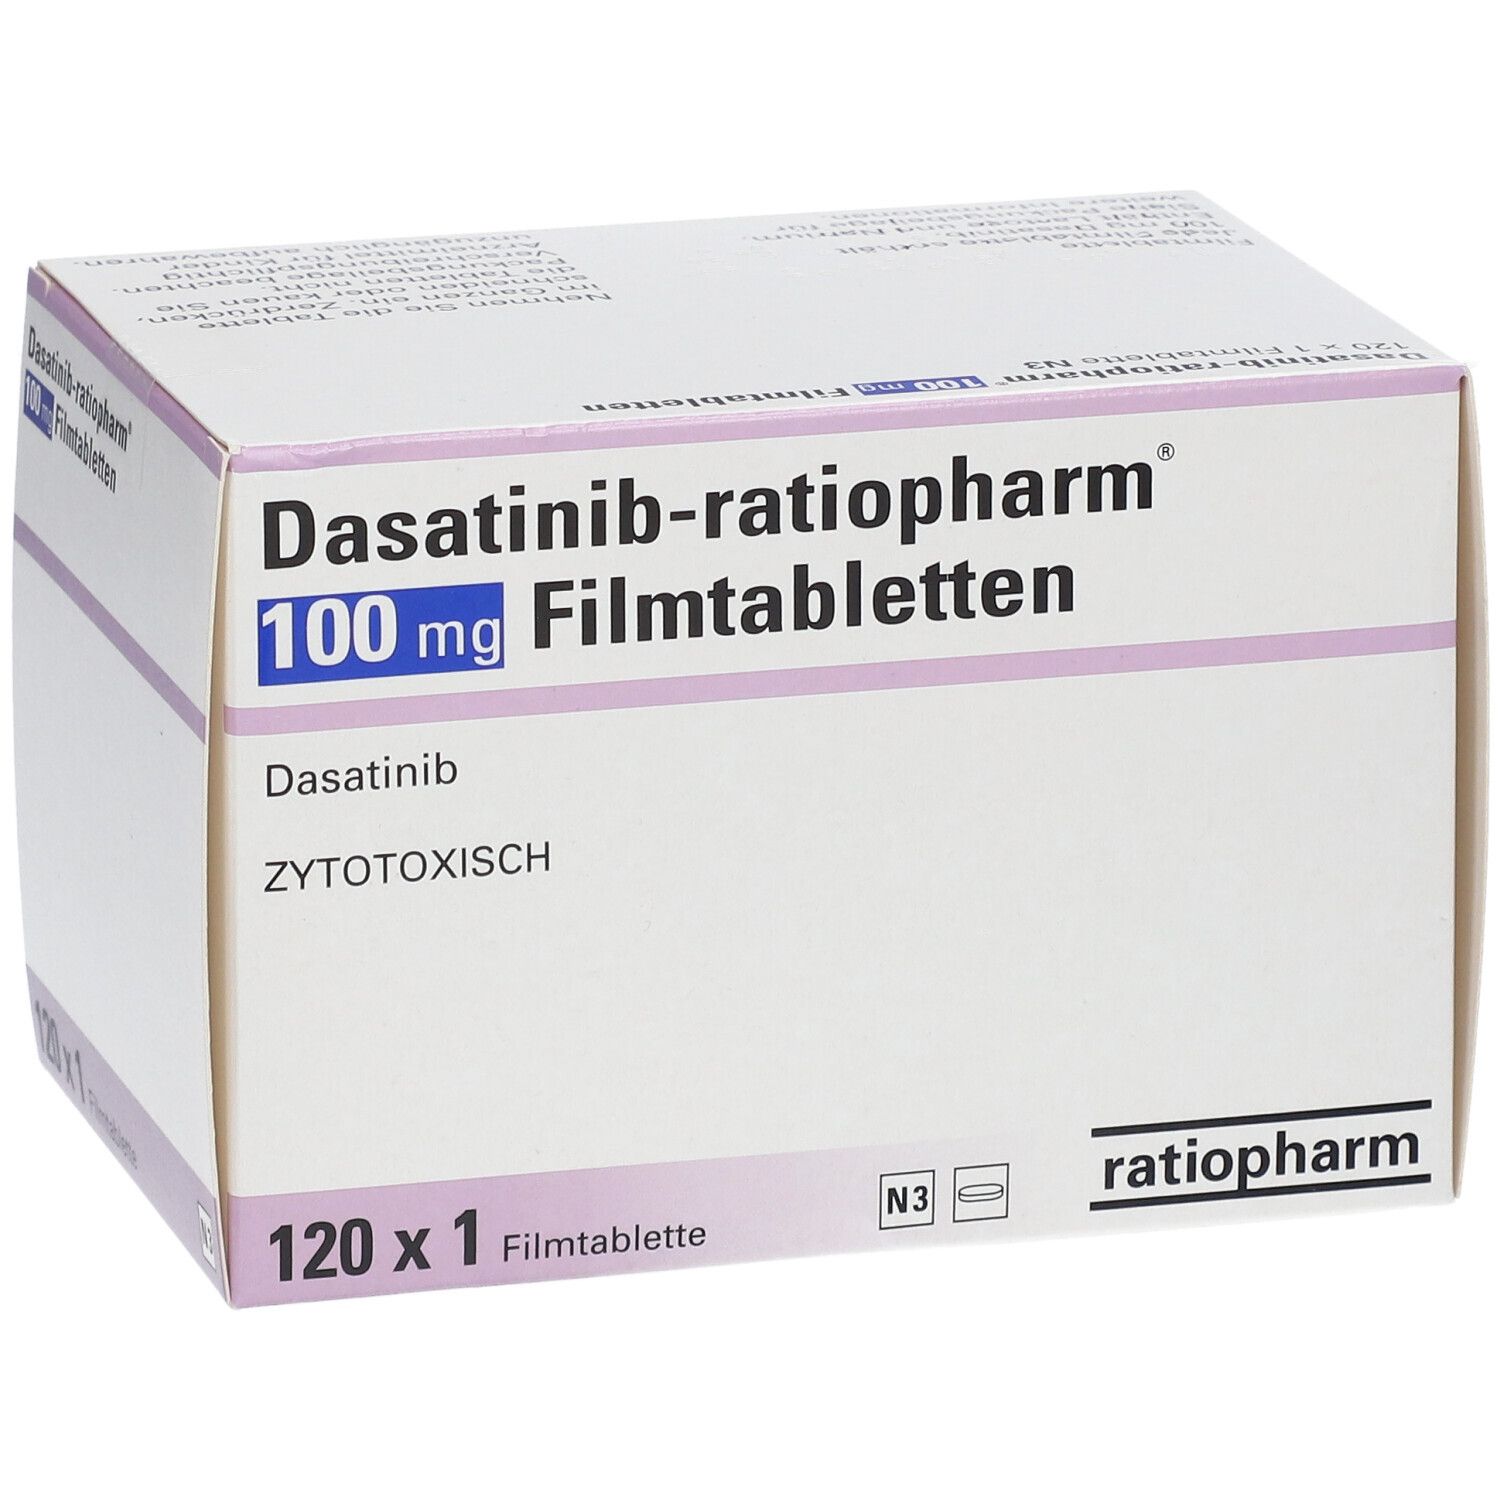 Dasatinib-ratiopharm® 100 mg